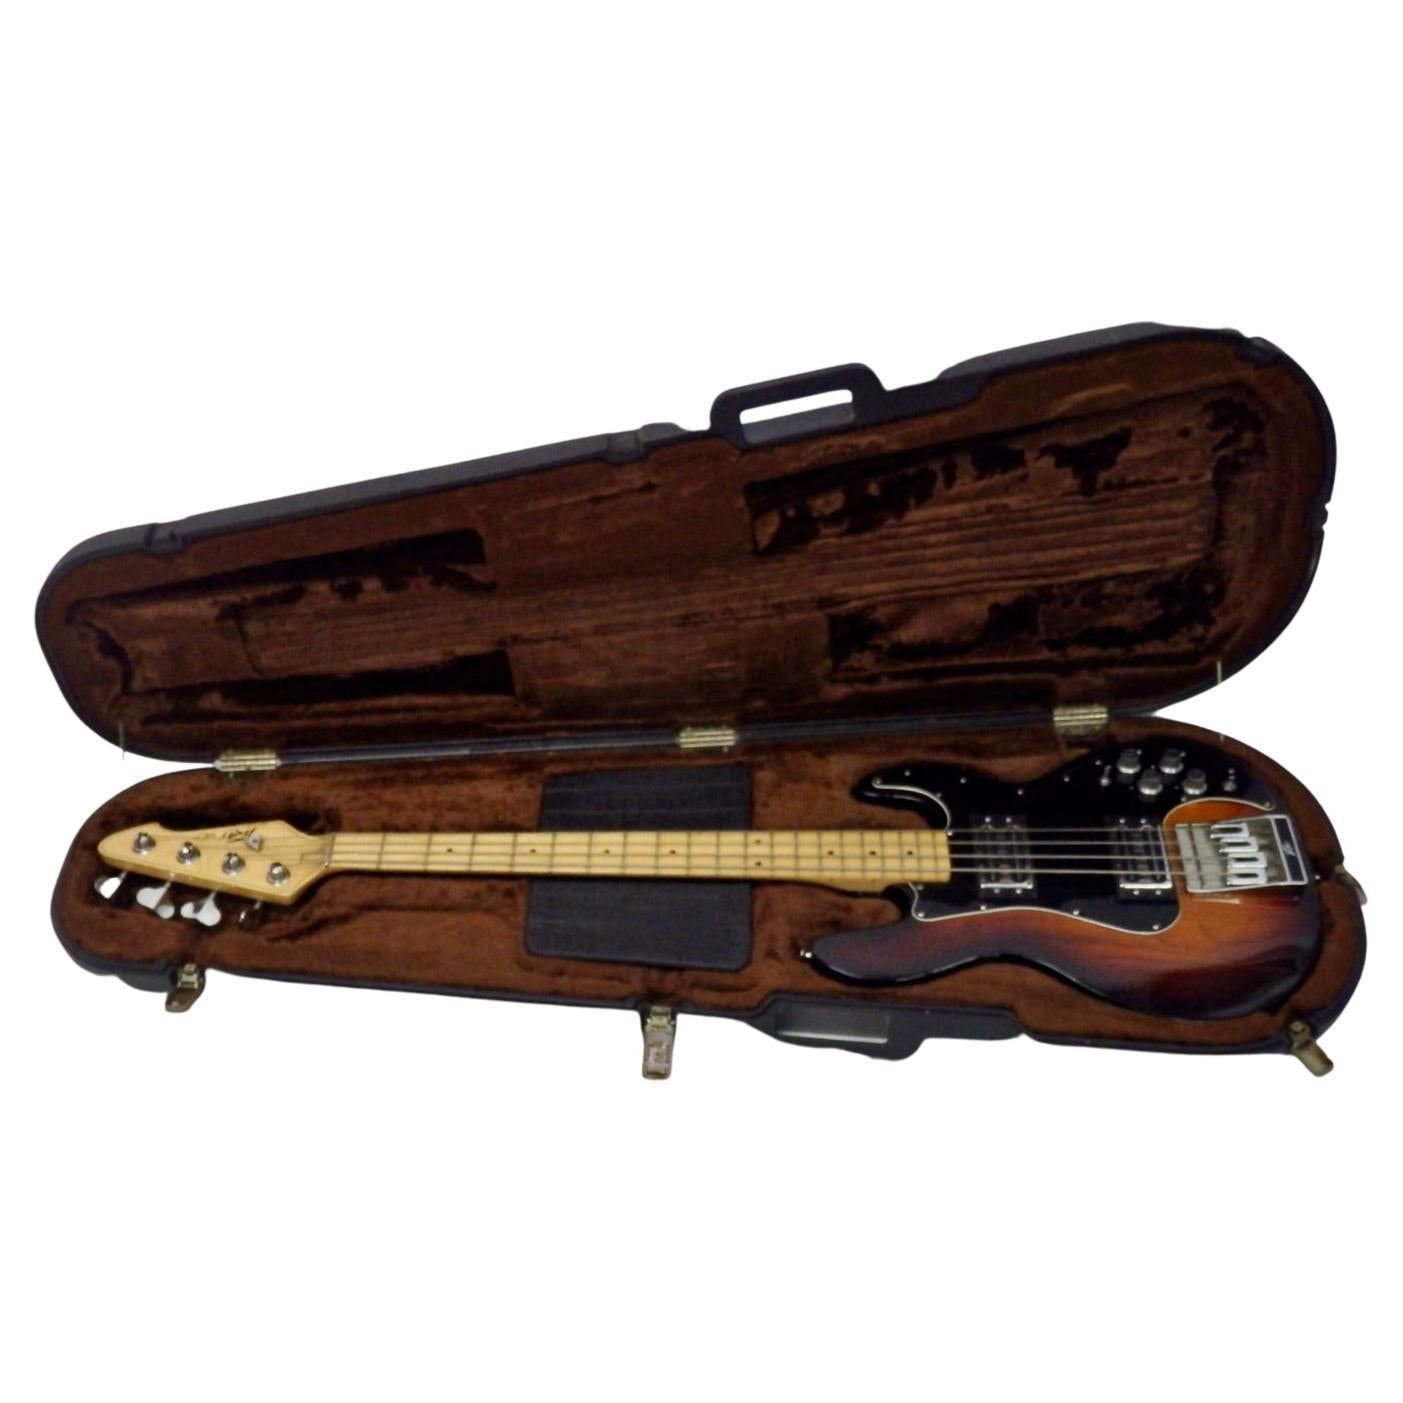 Peavey T 40 Bass Guitar with Original Hard Case